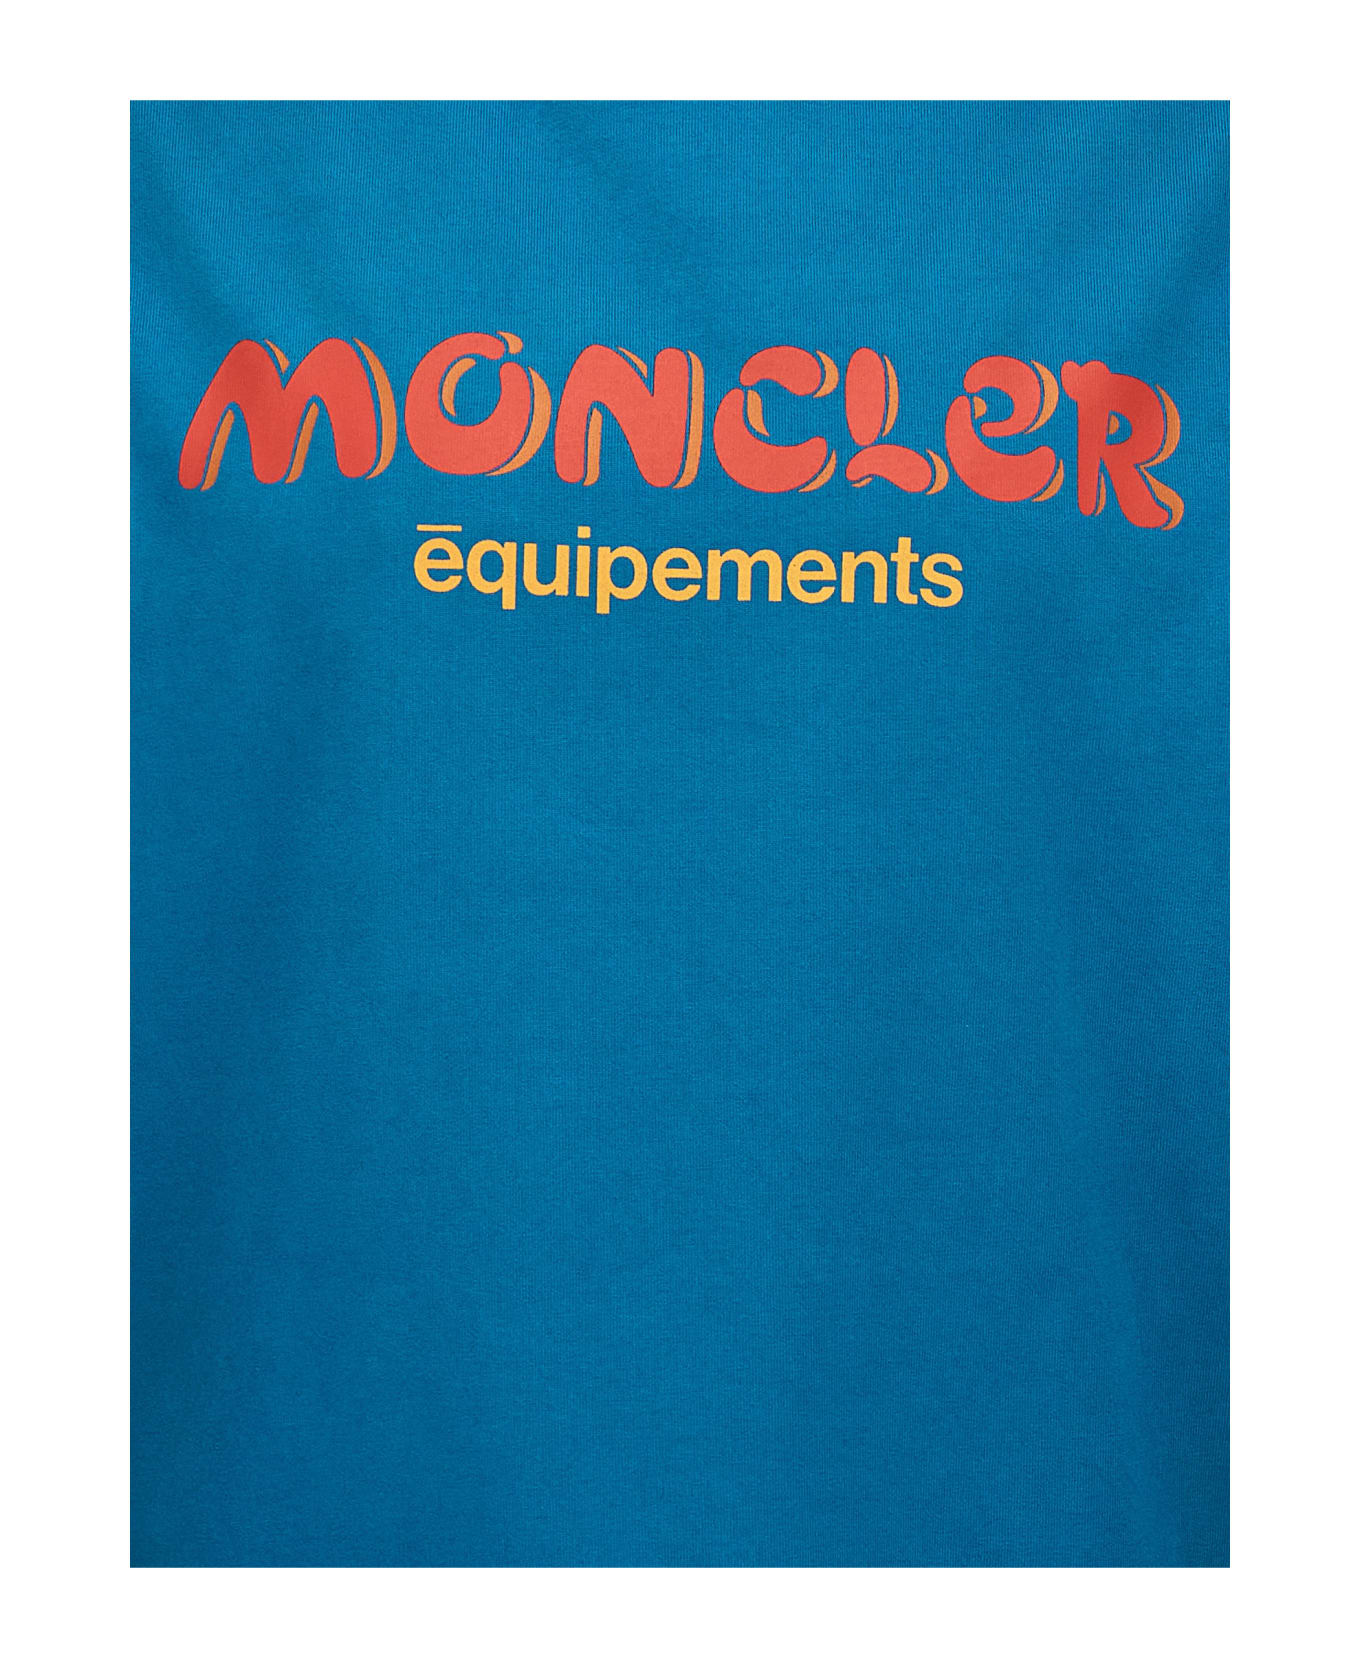 Moncler Genius T-shirt Moncler Genius X Salehe Bembury - Blue